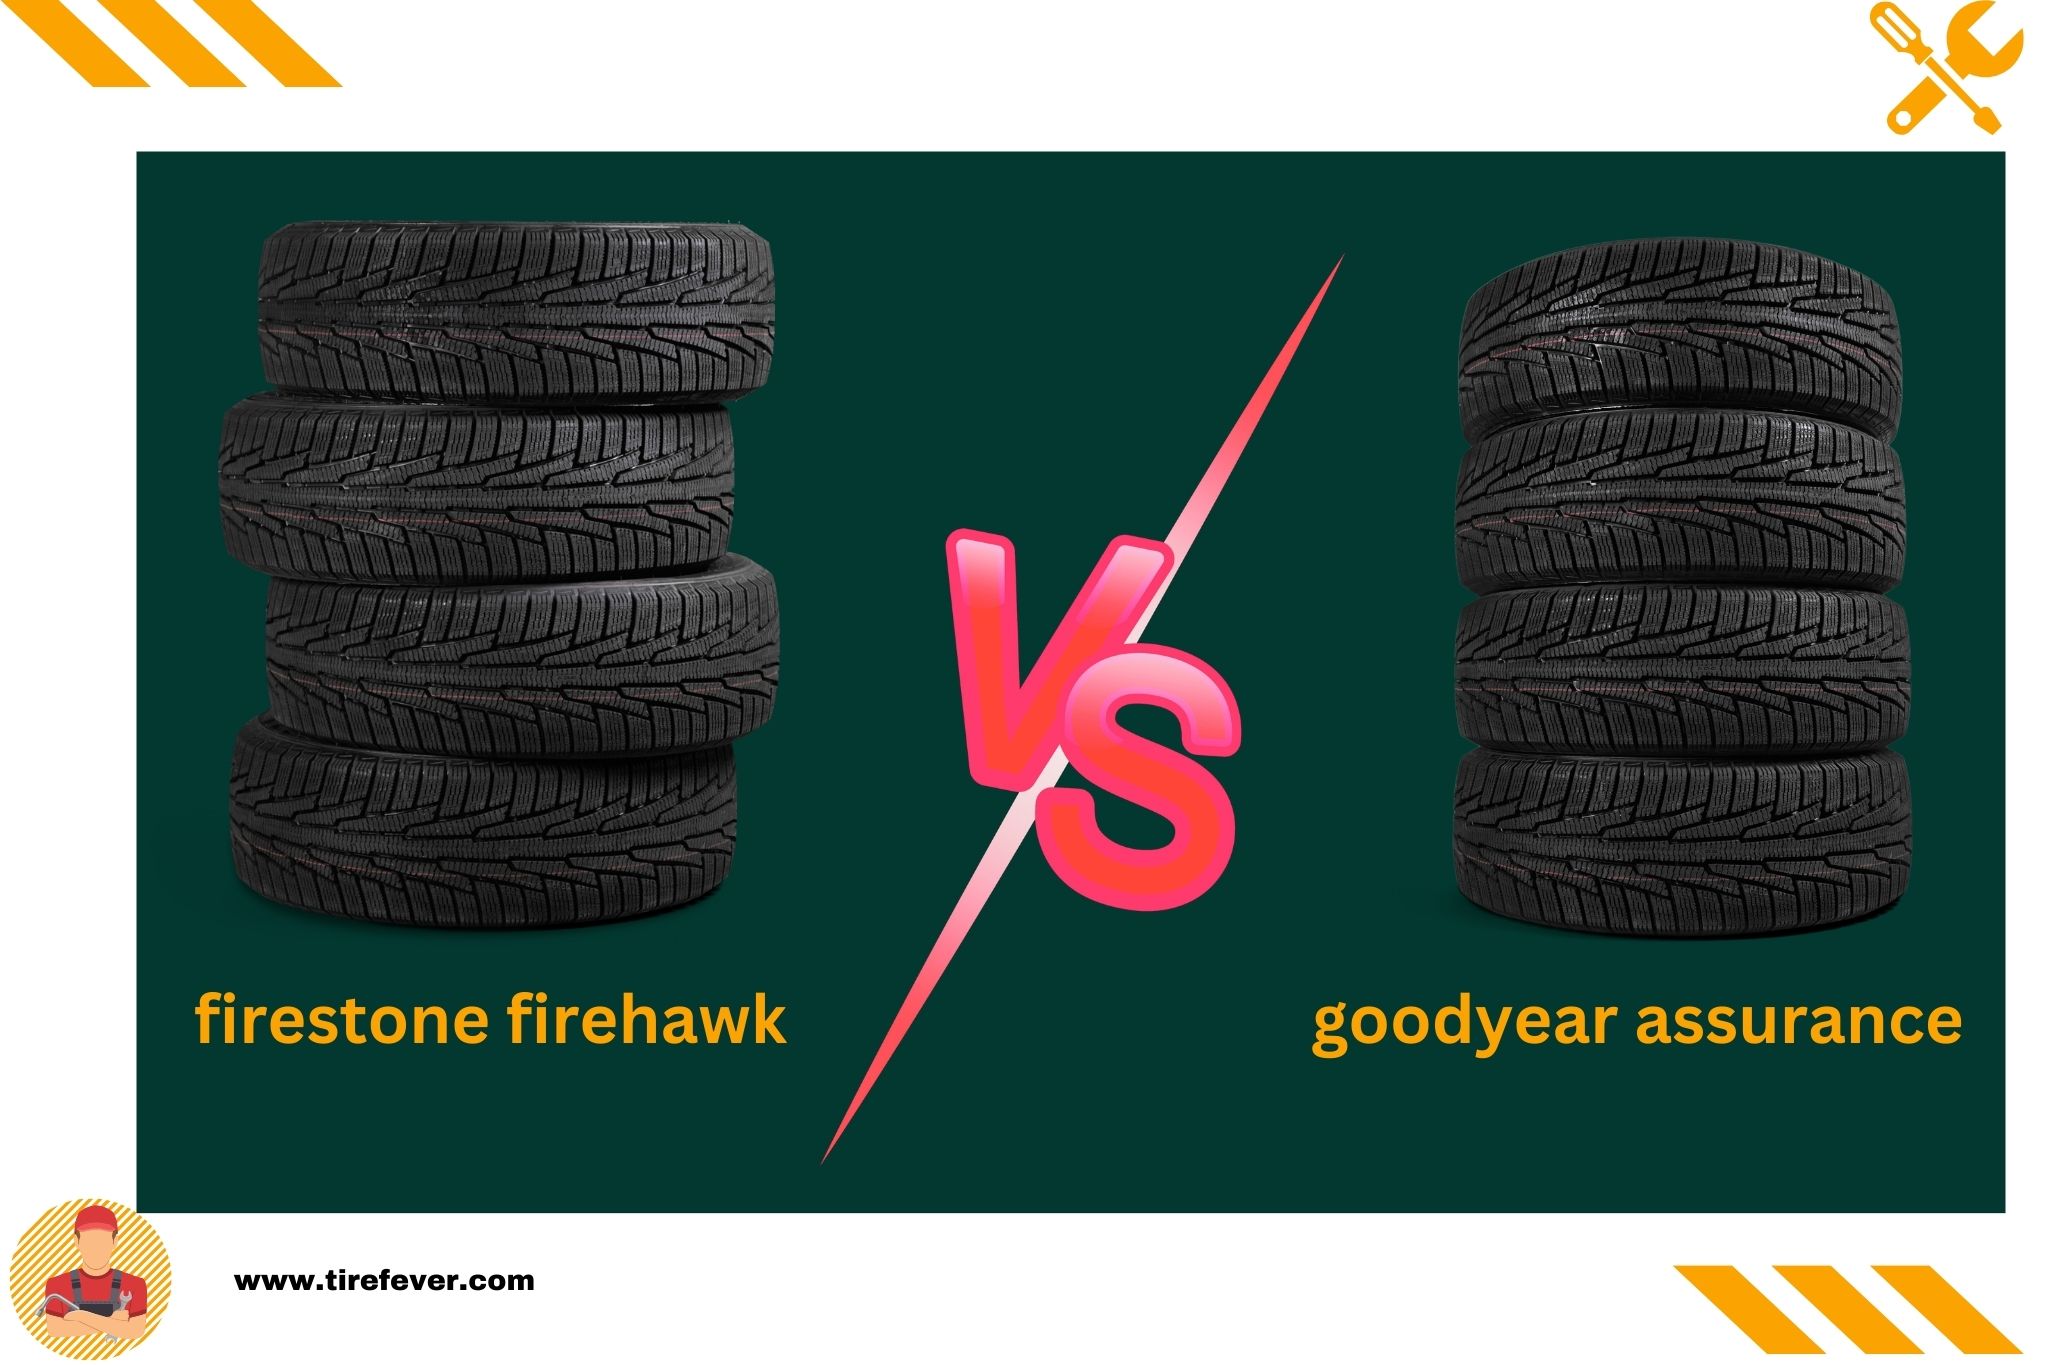 firestone firehawk vs goodyear assurance